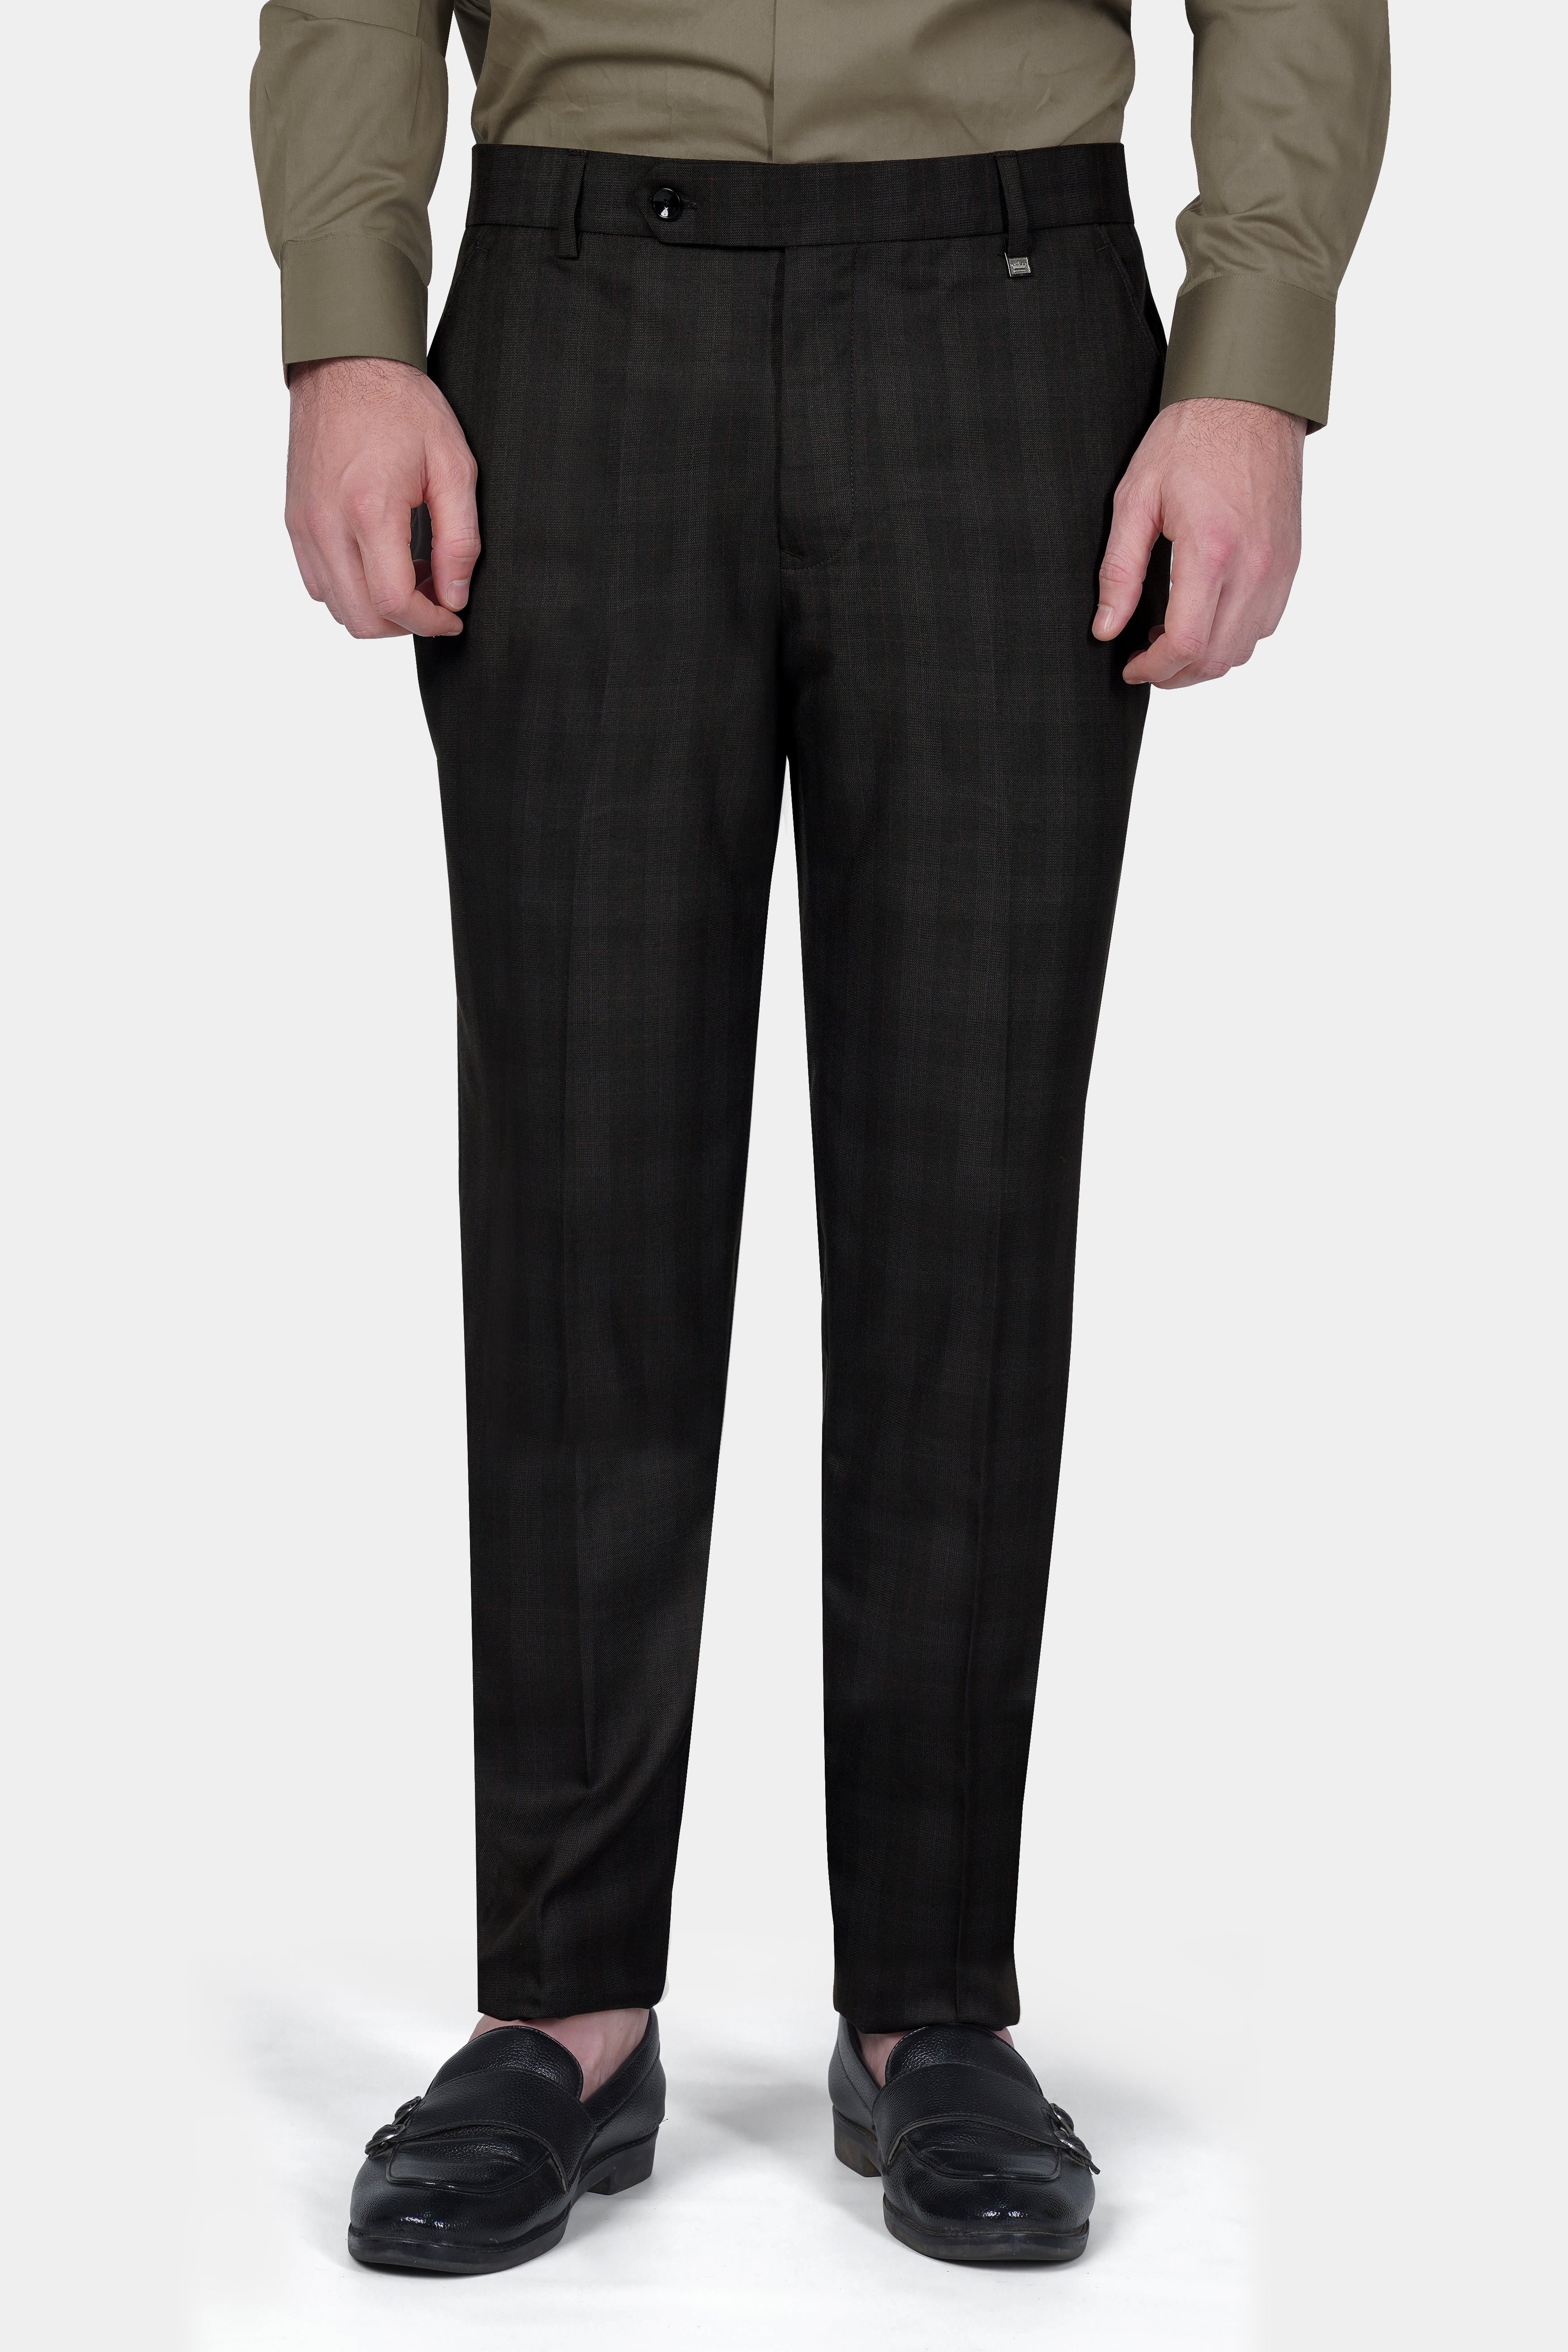 Lars Amadeus Black Formal Plaid Dress Pants for Men's Slim Fit Business  Office Checked Suit Trousers 28 at Amazon Men's Clothing store